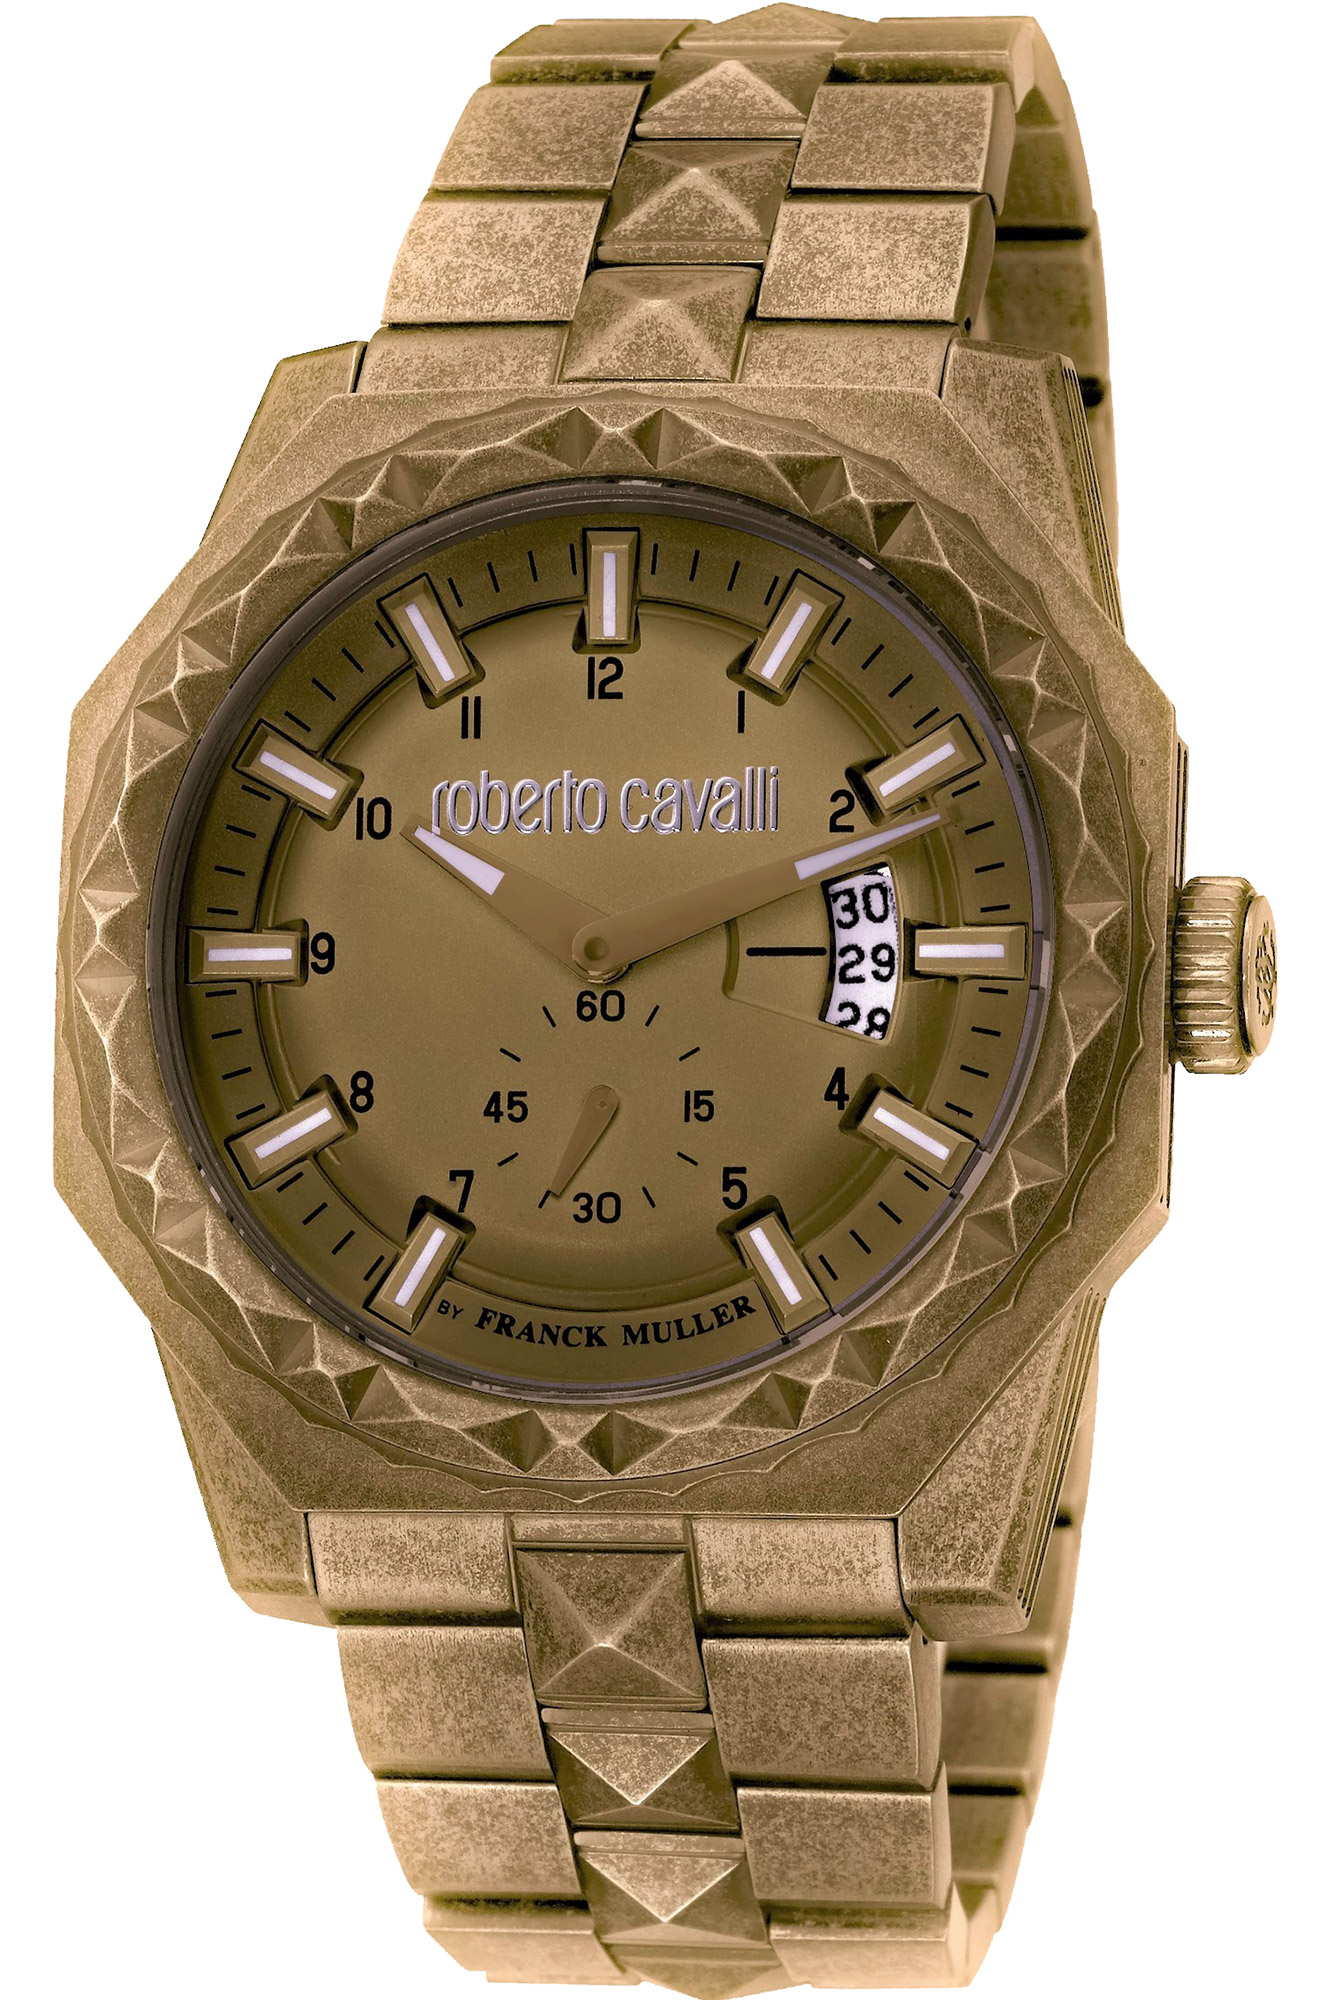 Reloj Roberto Cavalli by Franck Muller rv1g069m0076